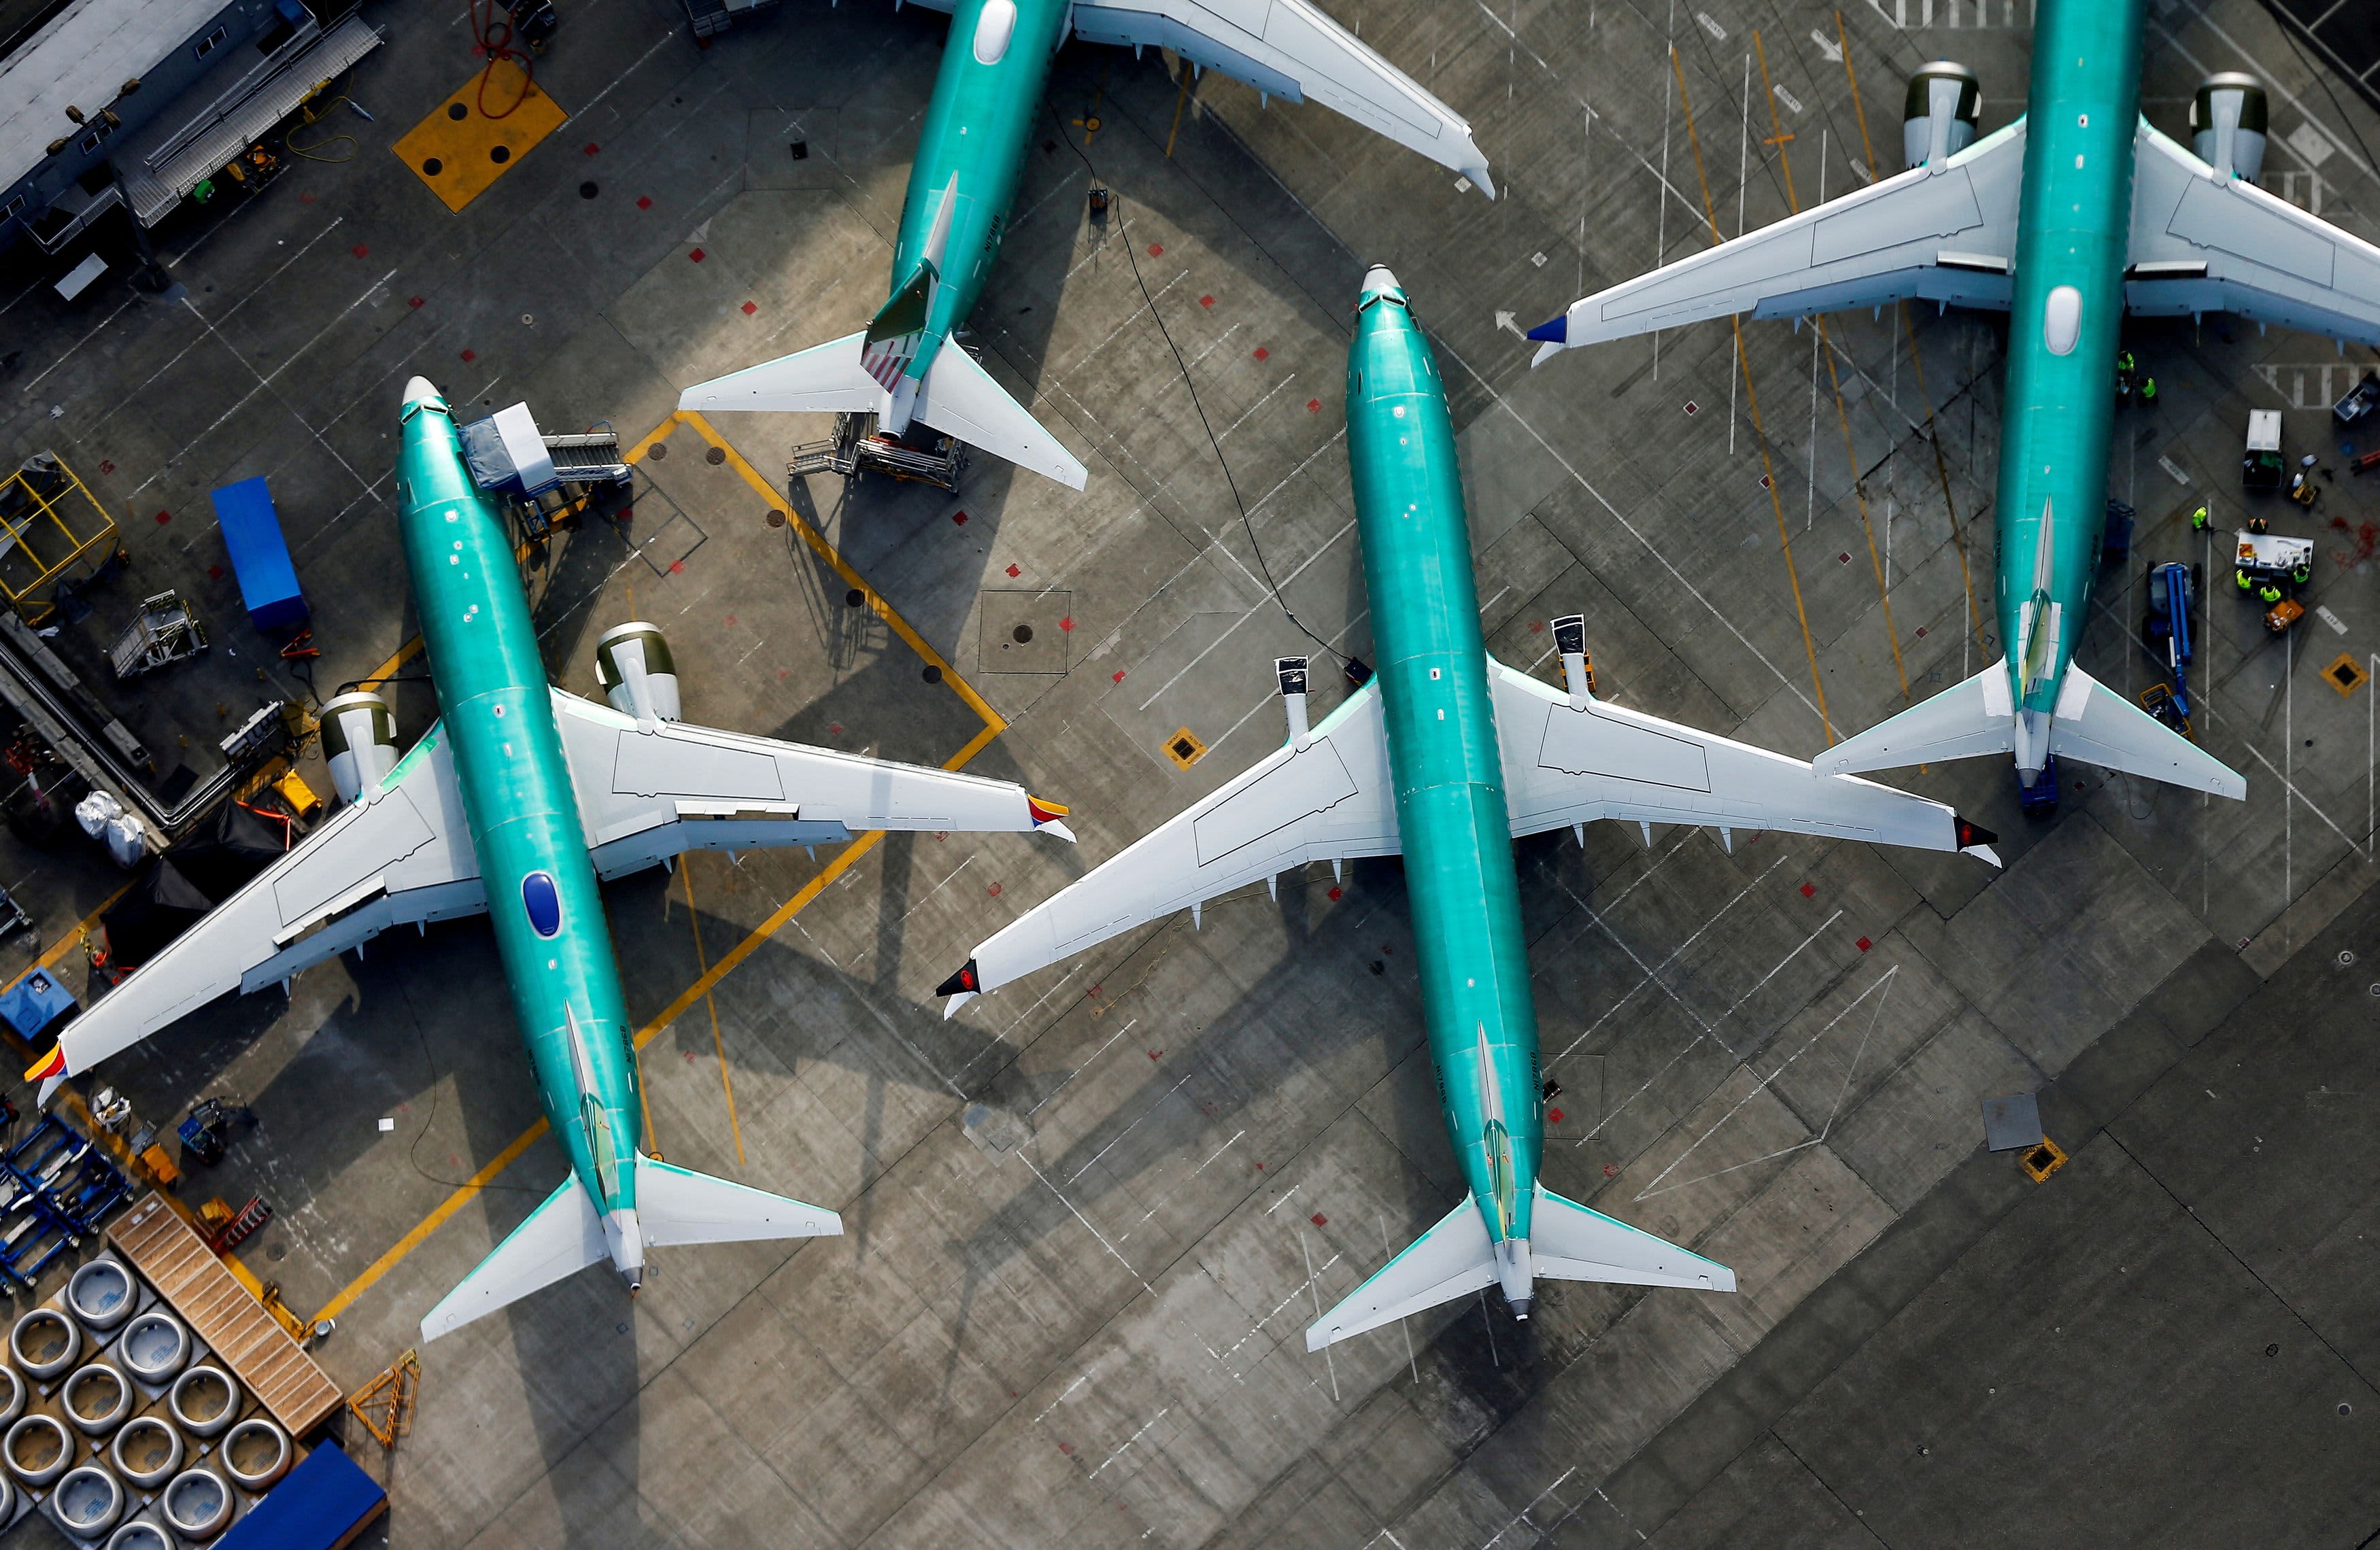 Boeing won’t display passenger jets; Airbus, China will